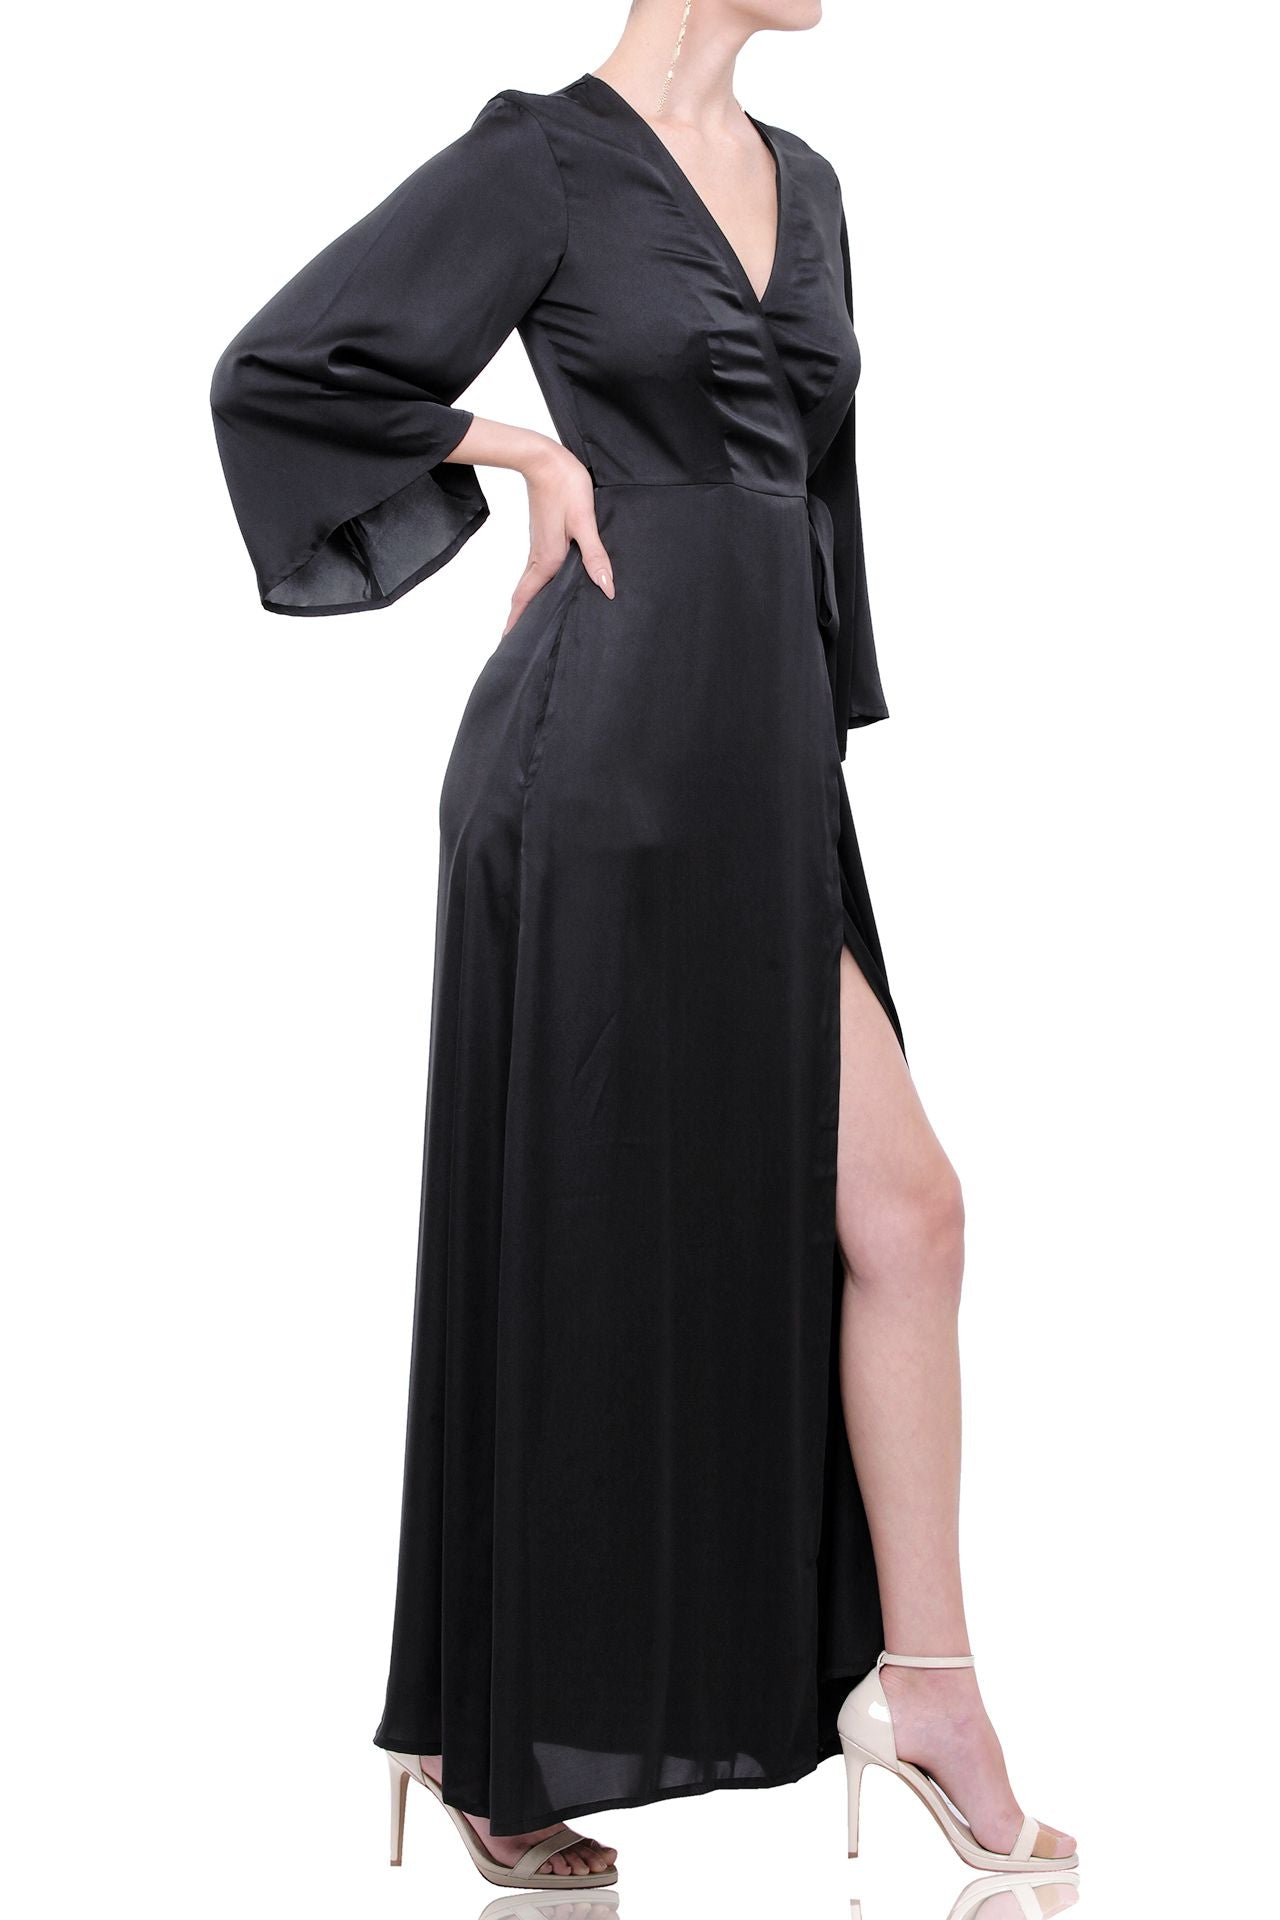 "black wrap over dress" "Kyle X Shahida" "women's long sleeve wrap dress" "wrap maxi dress"